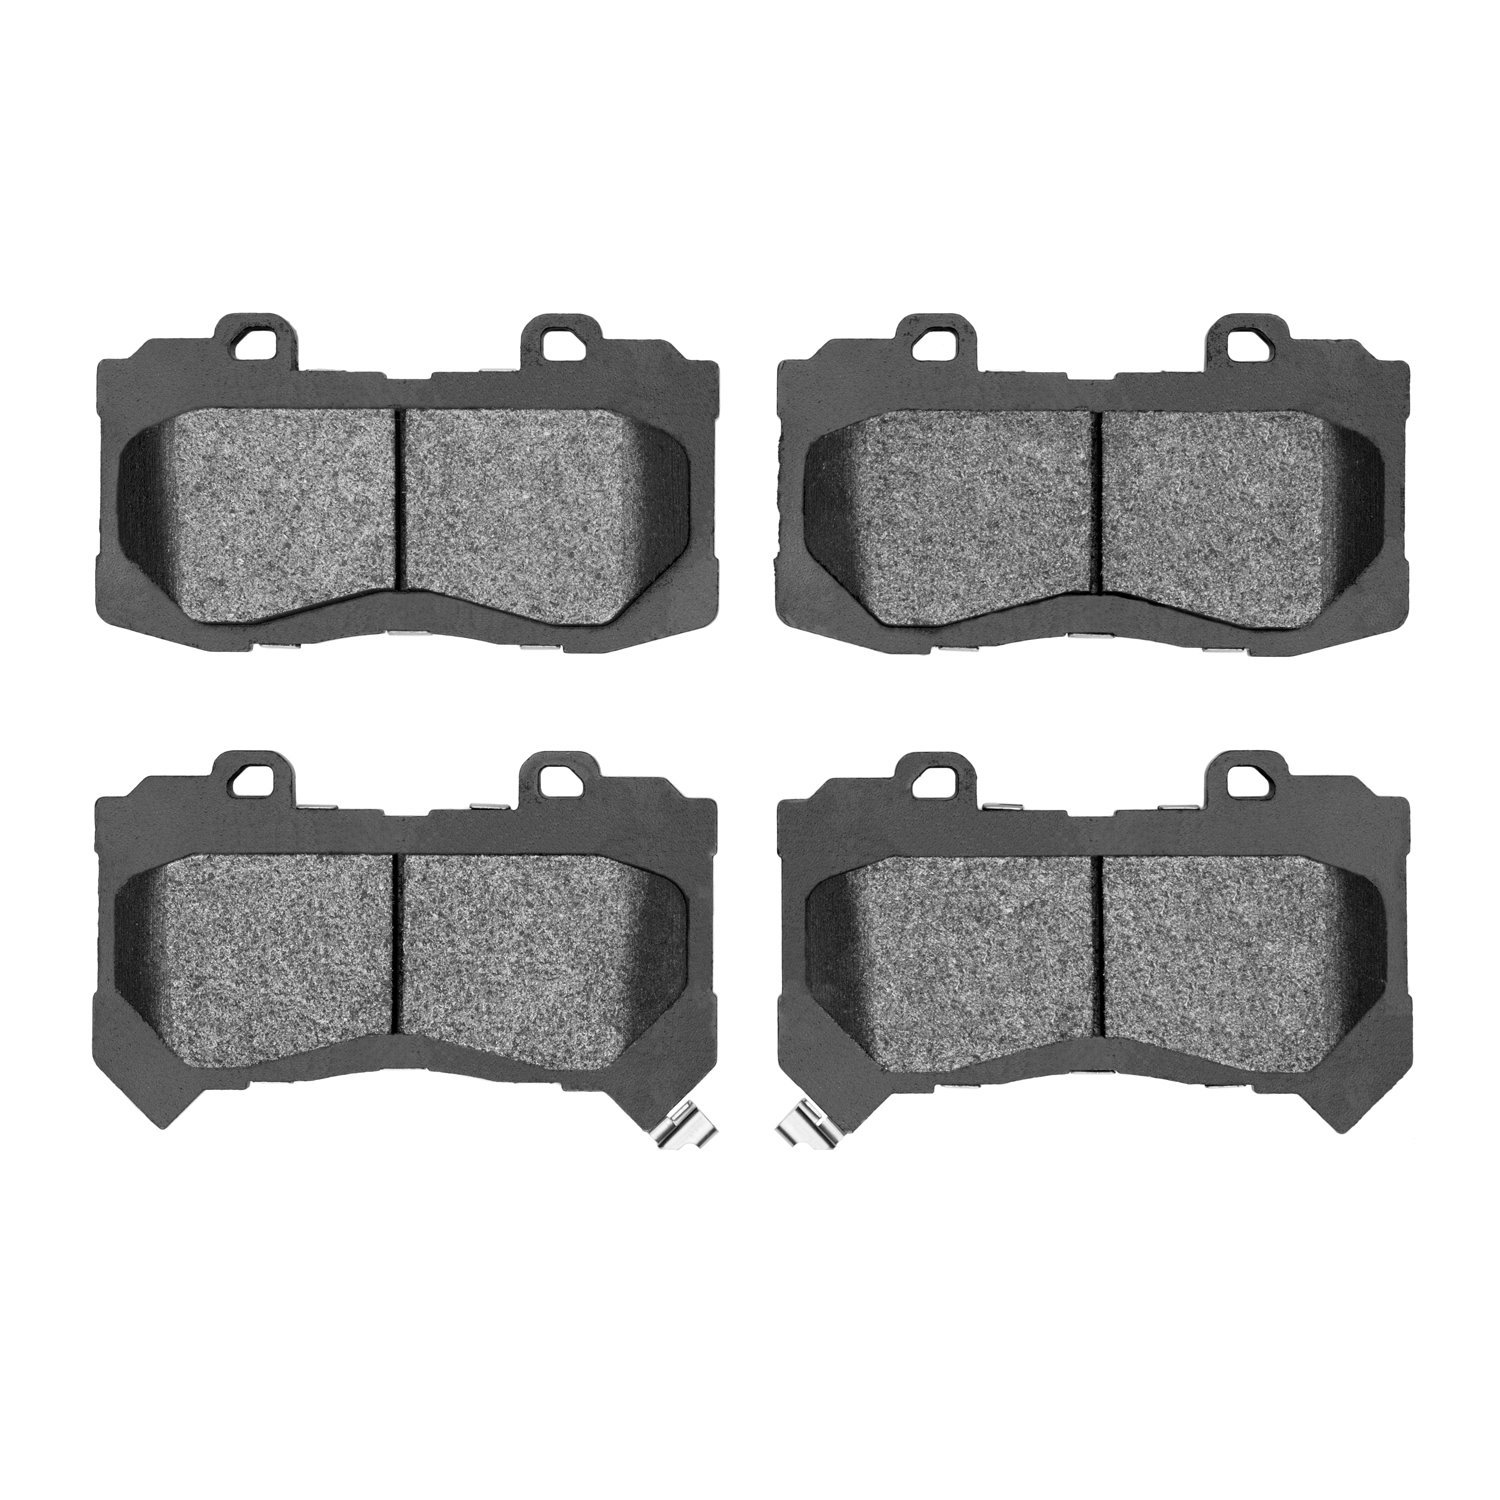 1551-1802-00 5000 Advanced Ceramic Brake Pads, 2015-2020 GM, Position: Front